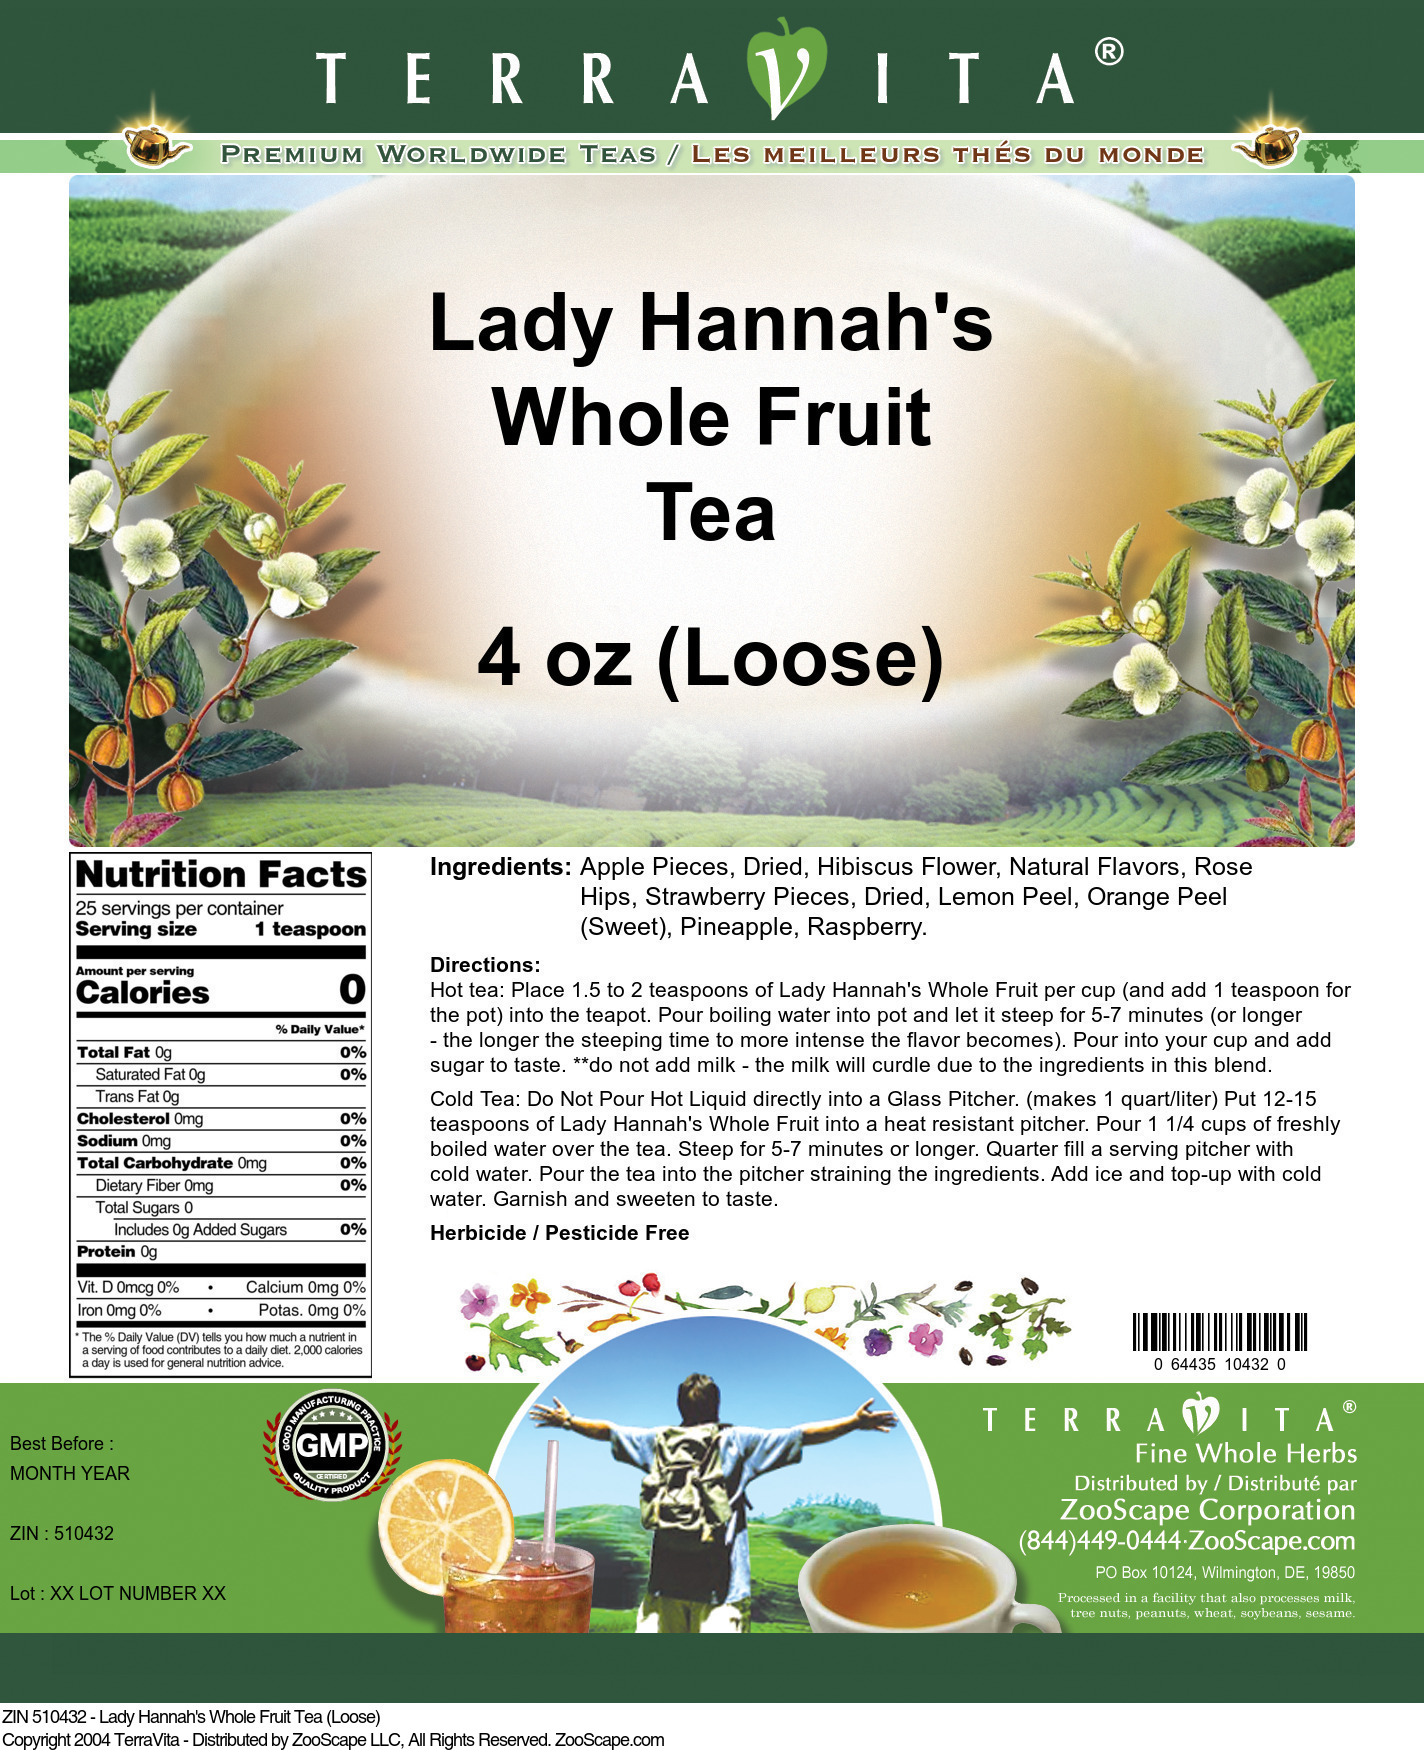 Lady Hannah's Whole Fruit Tea (Loose) - Label